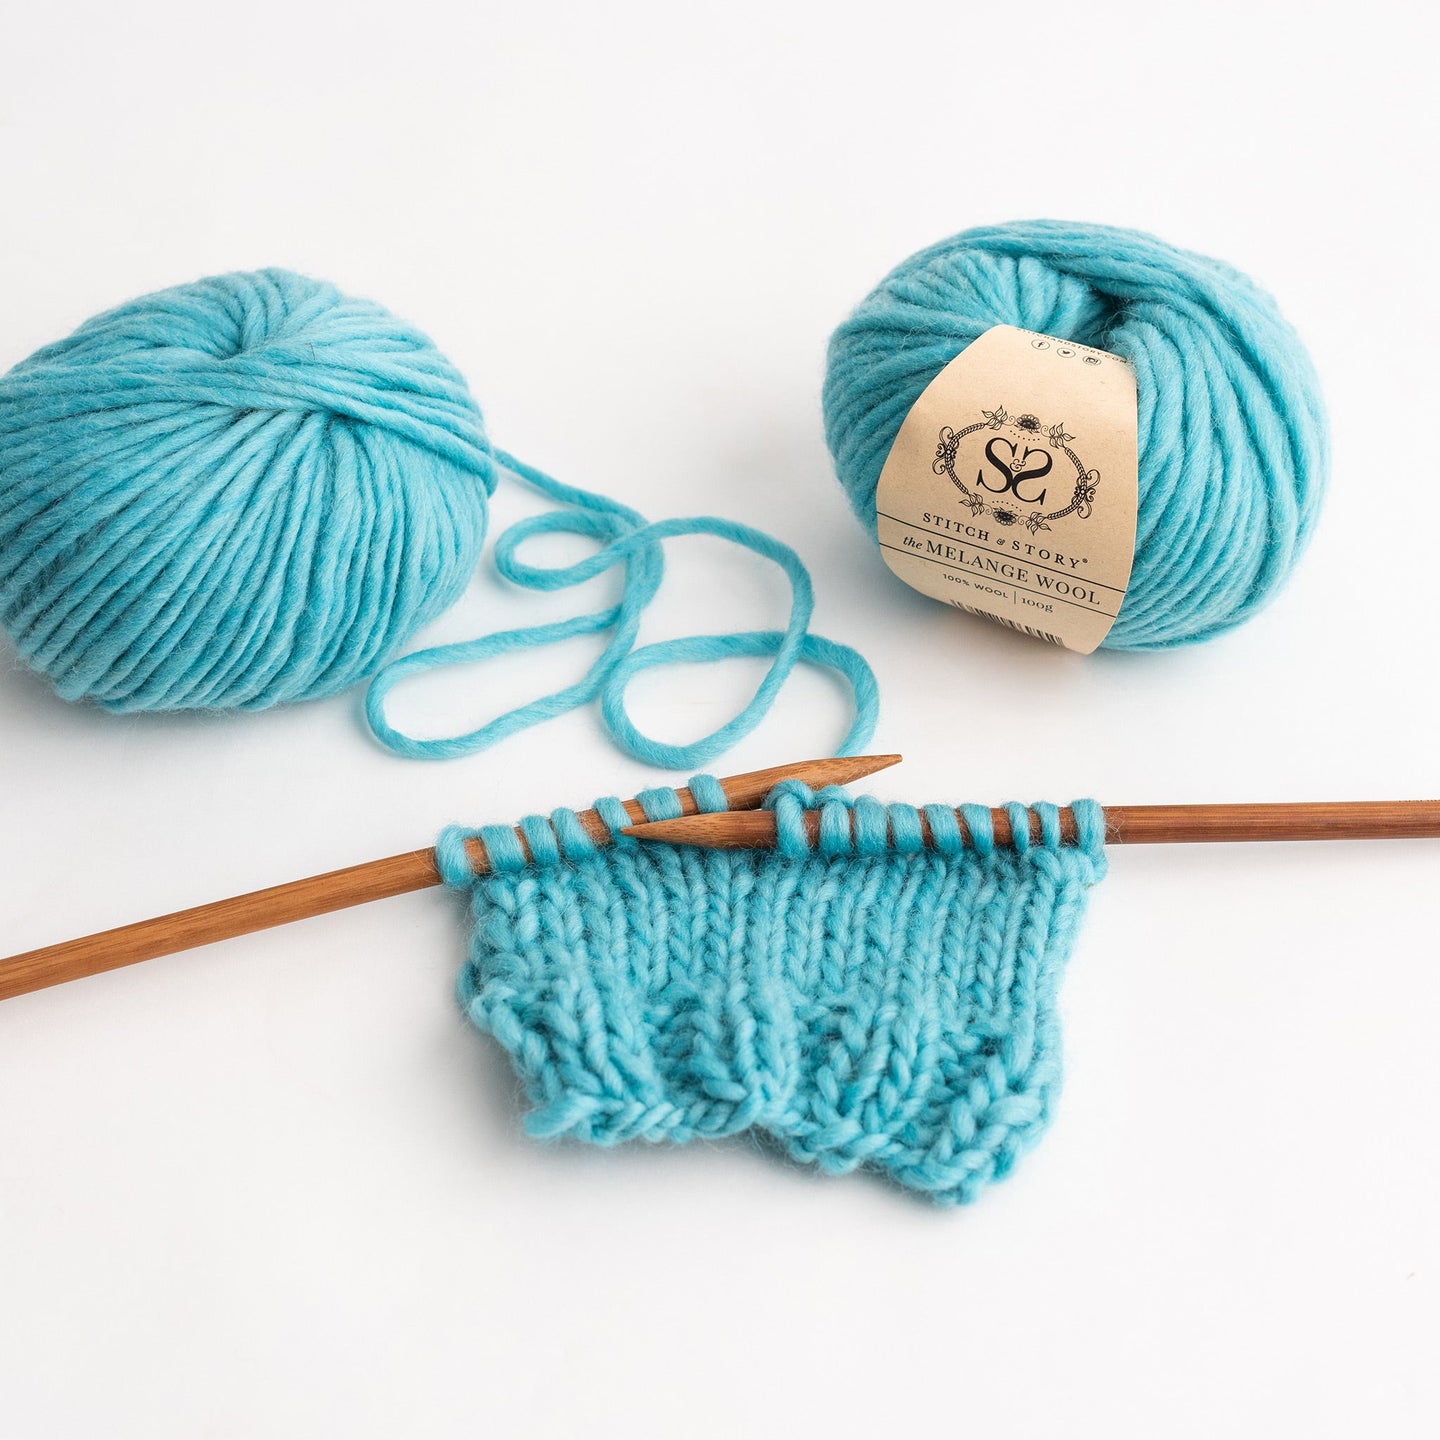 Melange Wool 100g Balls | Stitch & Story